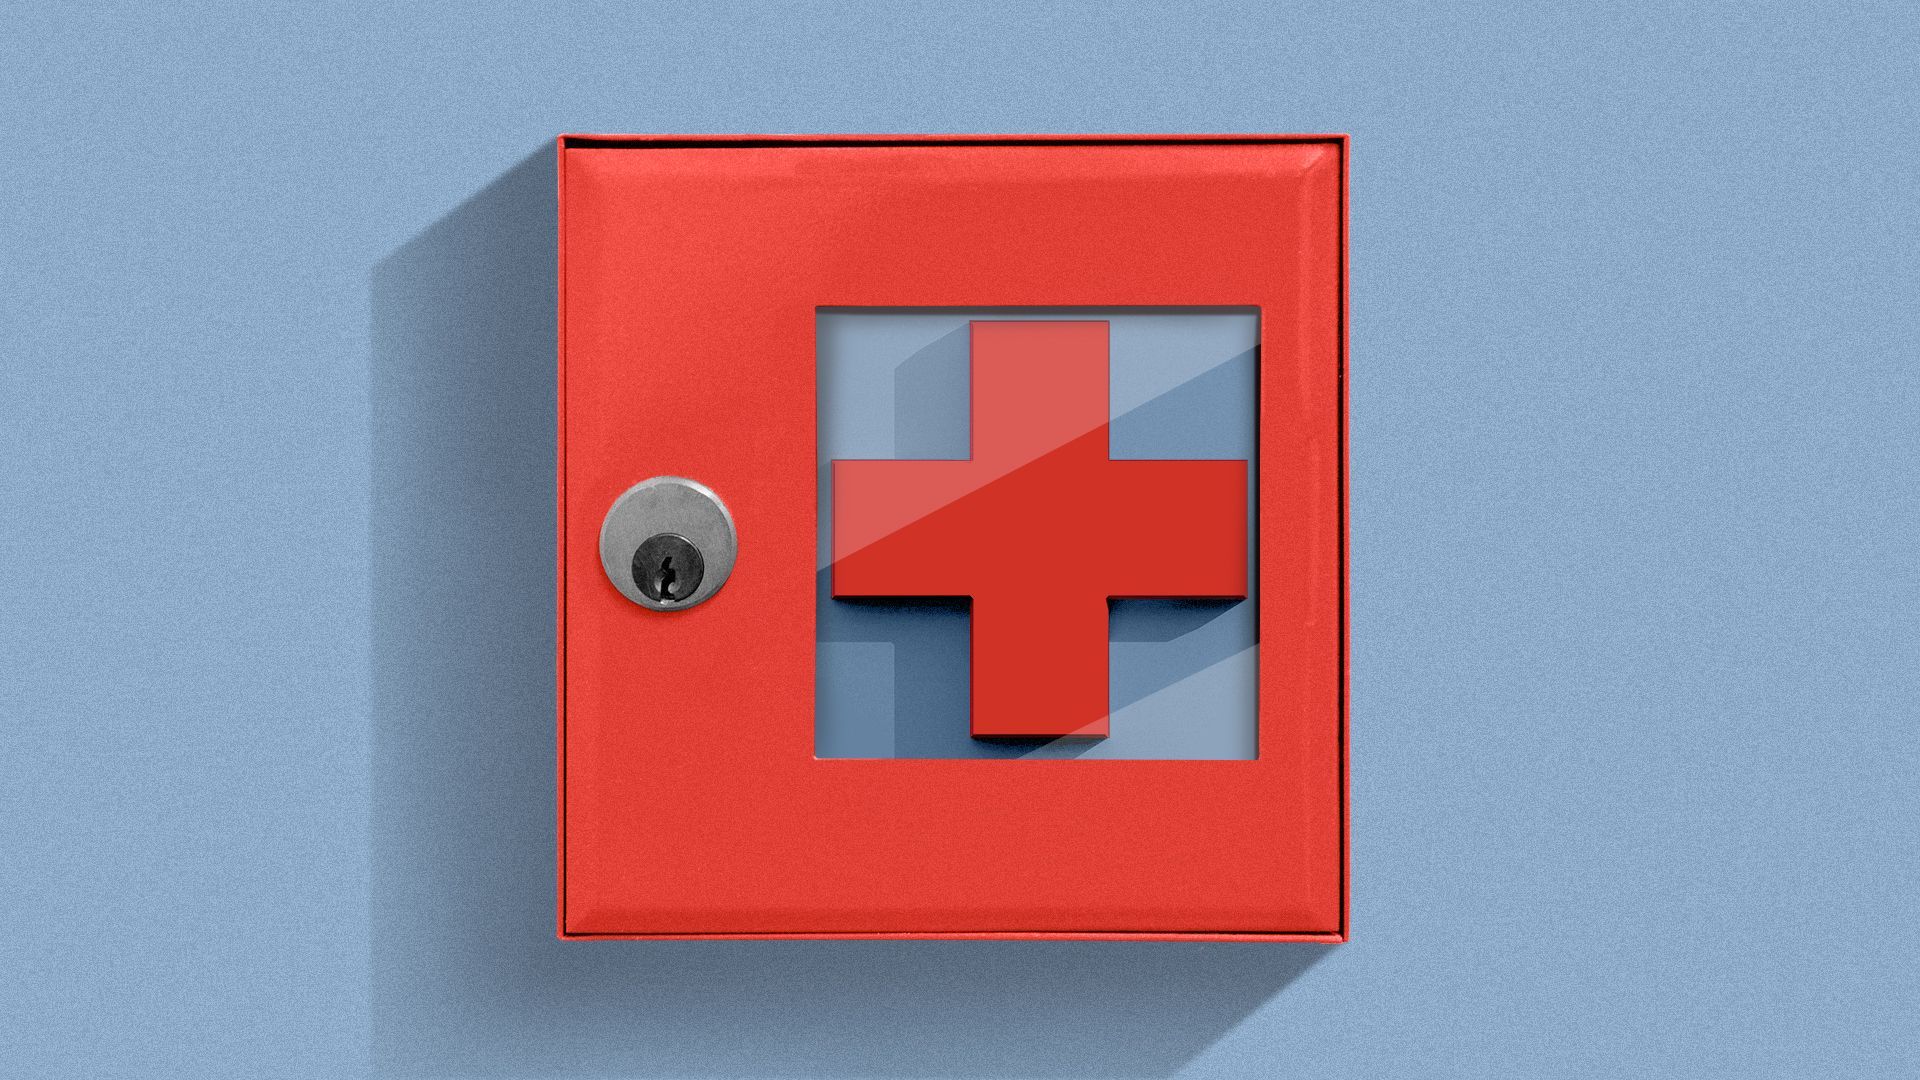 Illustration of glass lockbox with red cross inside.